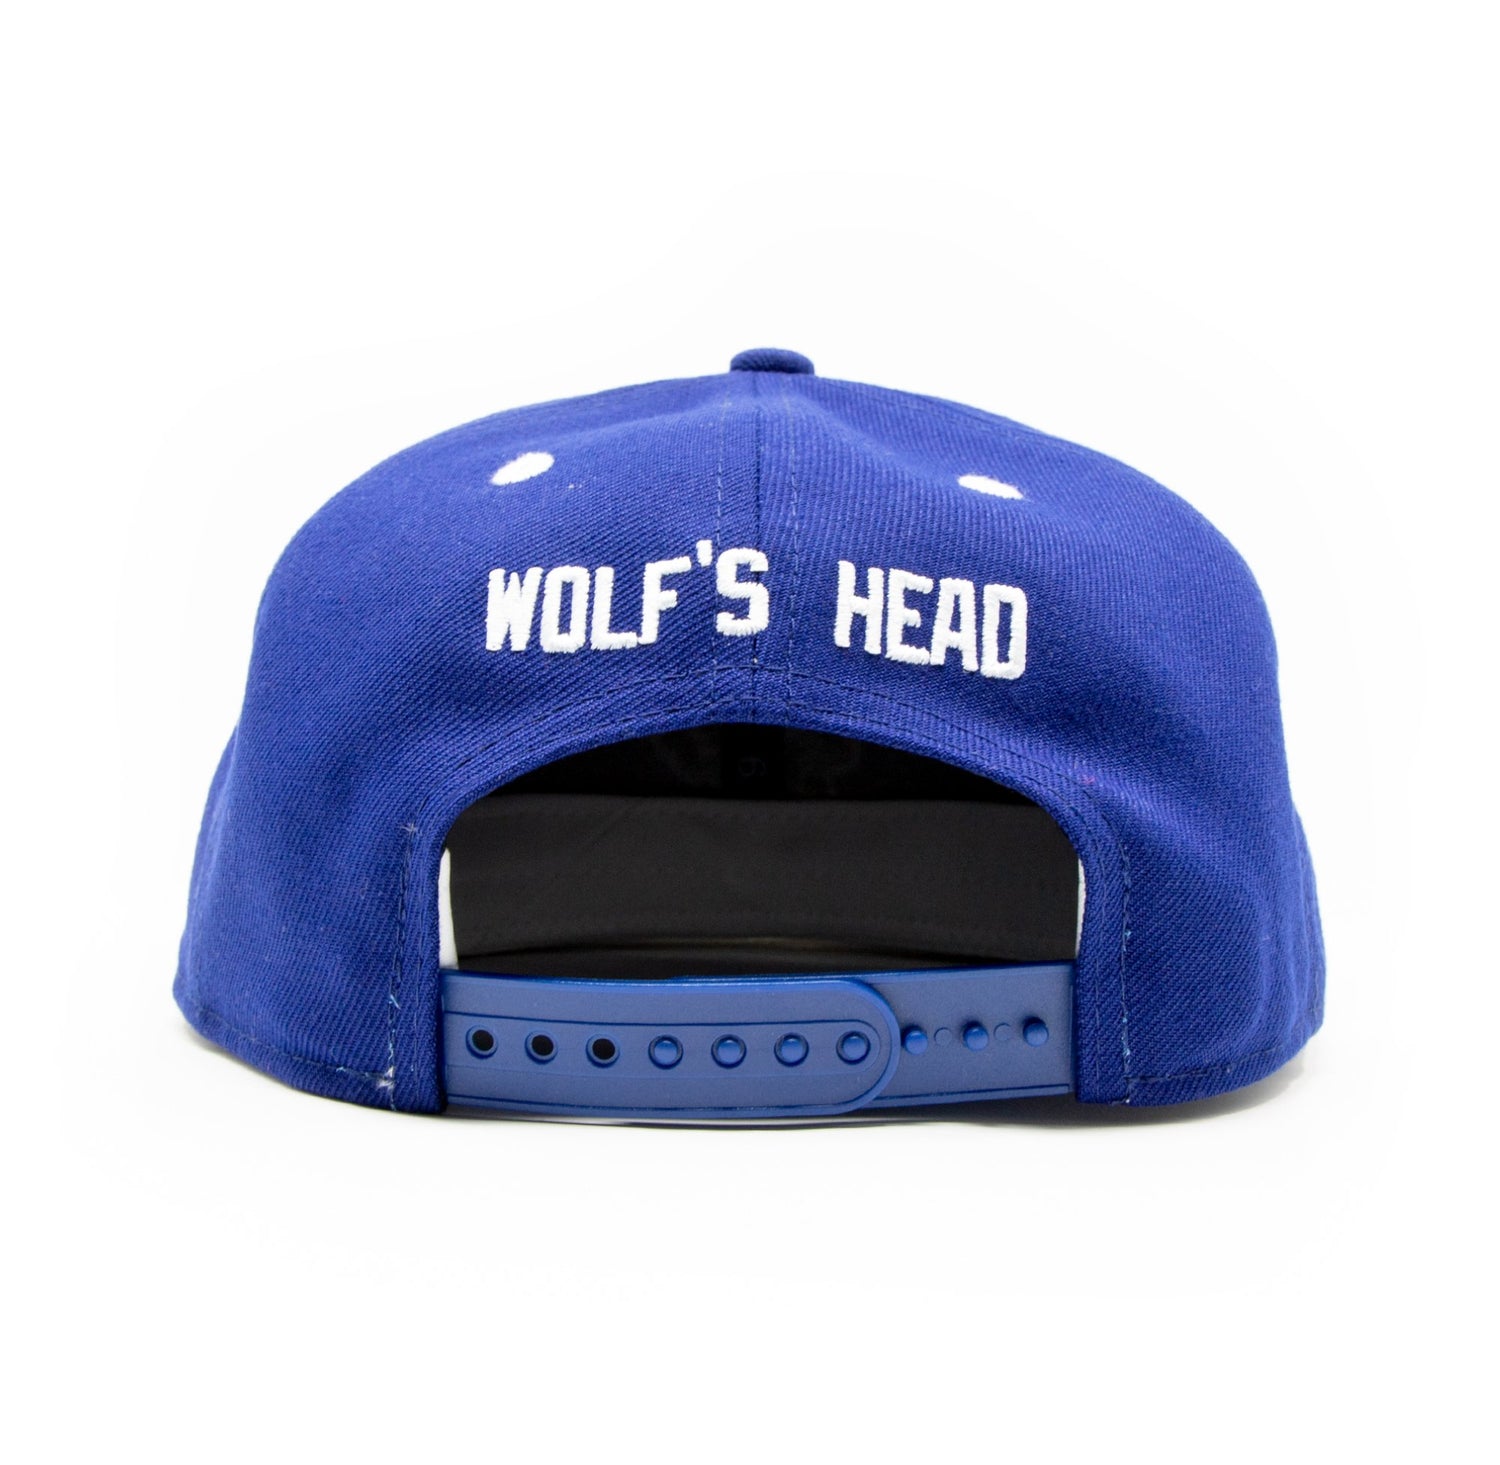 New Era For Wolf's Head - Royal Blue Snapback Cap